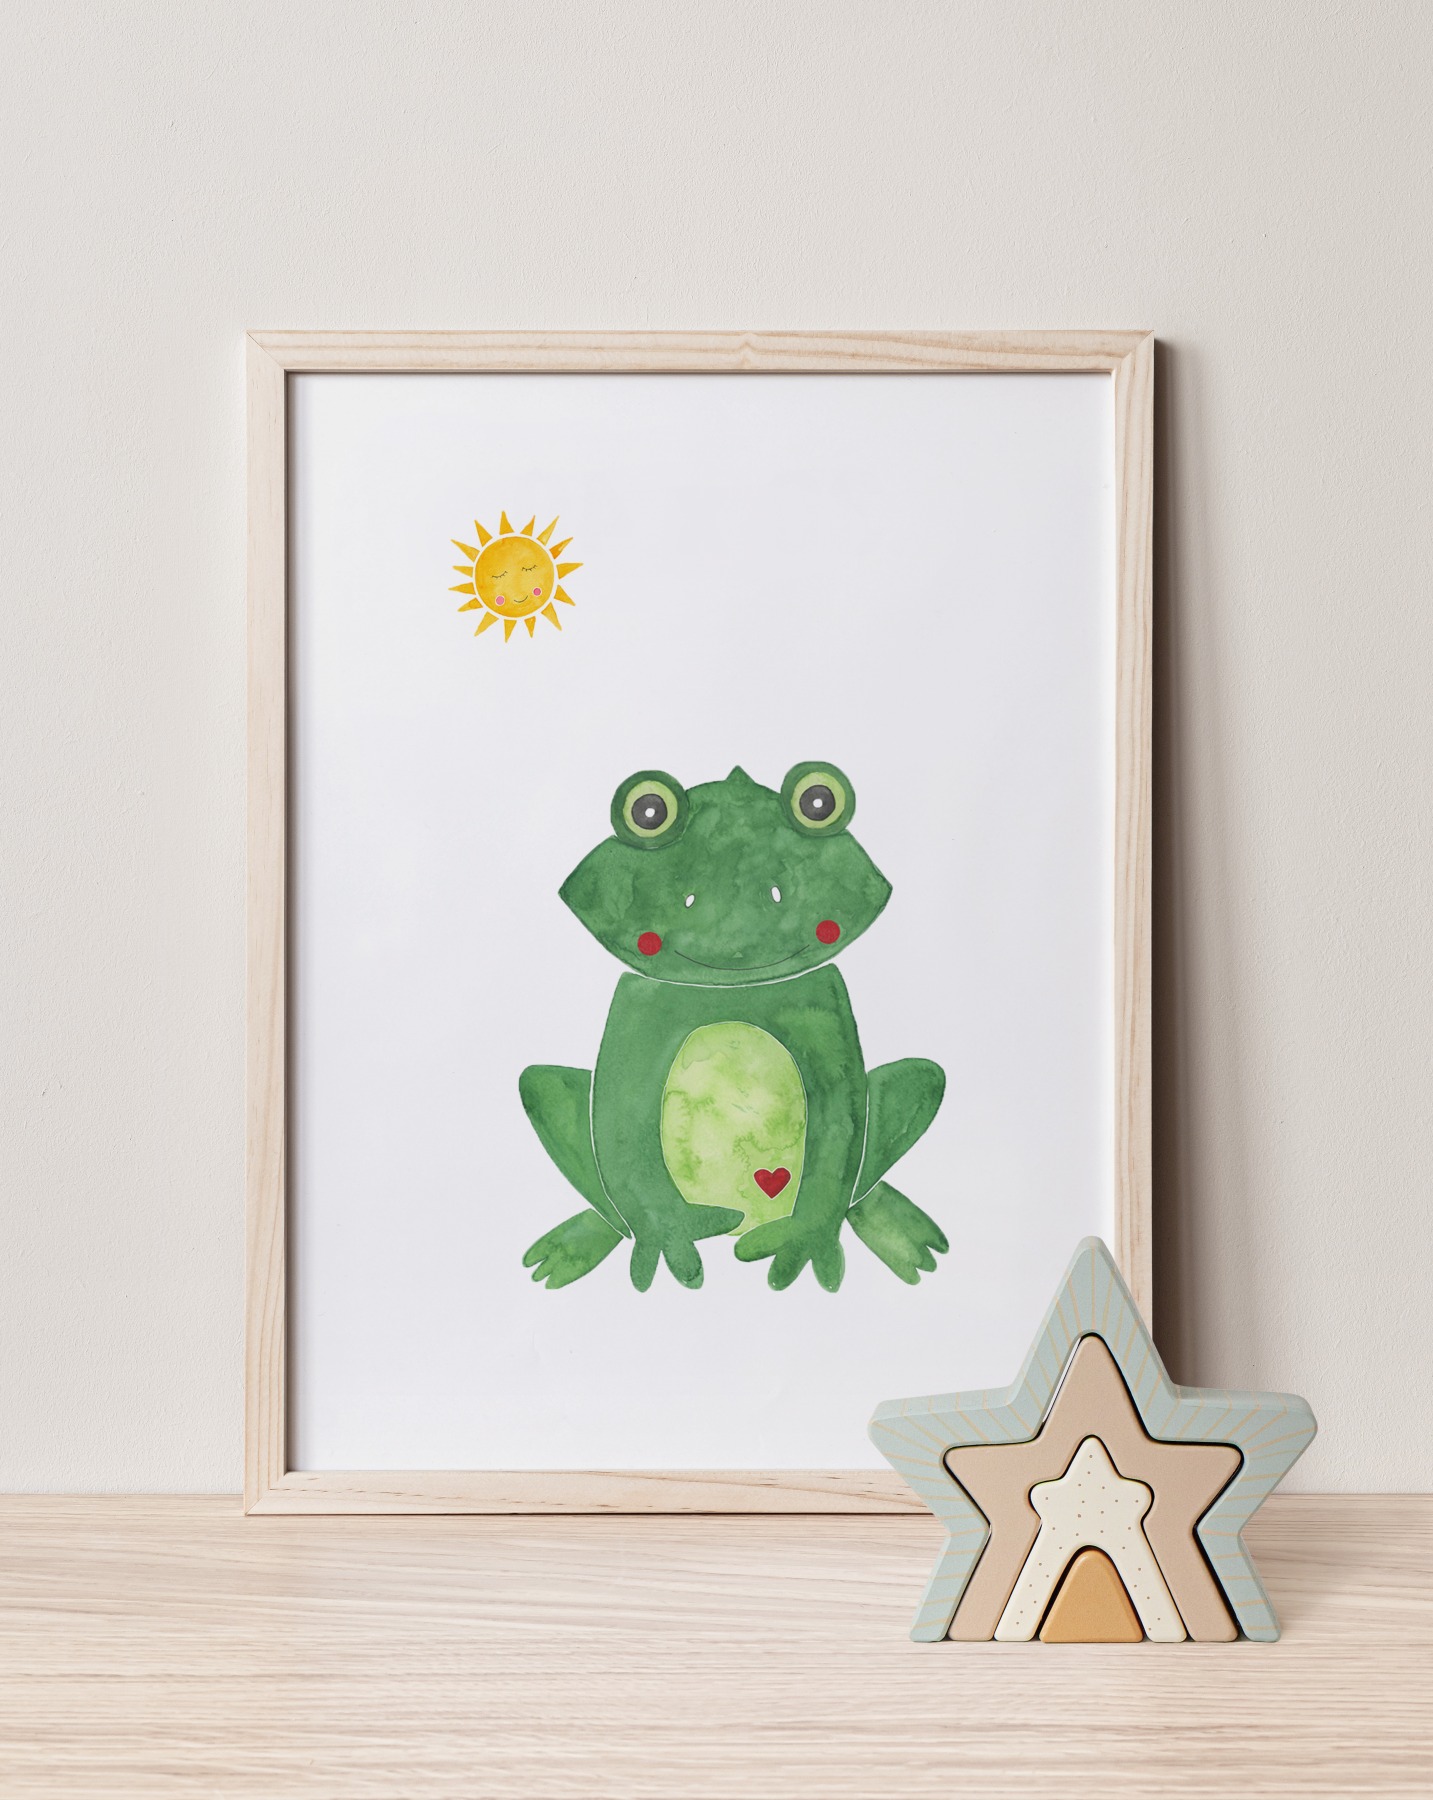 Kinderzimmer Poster Frosch 5